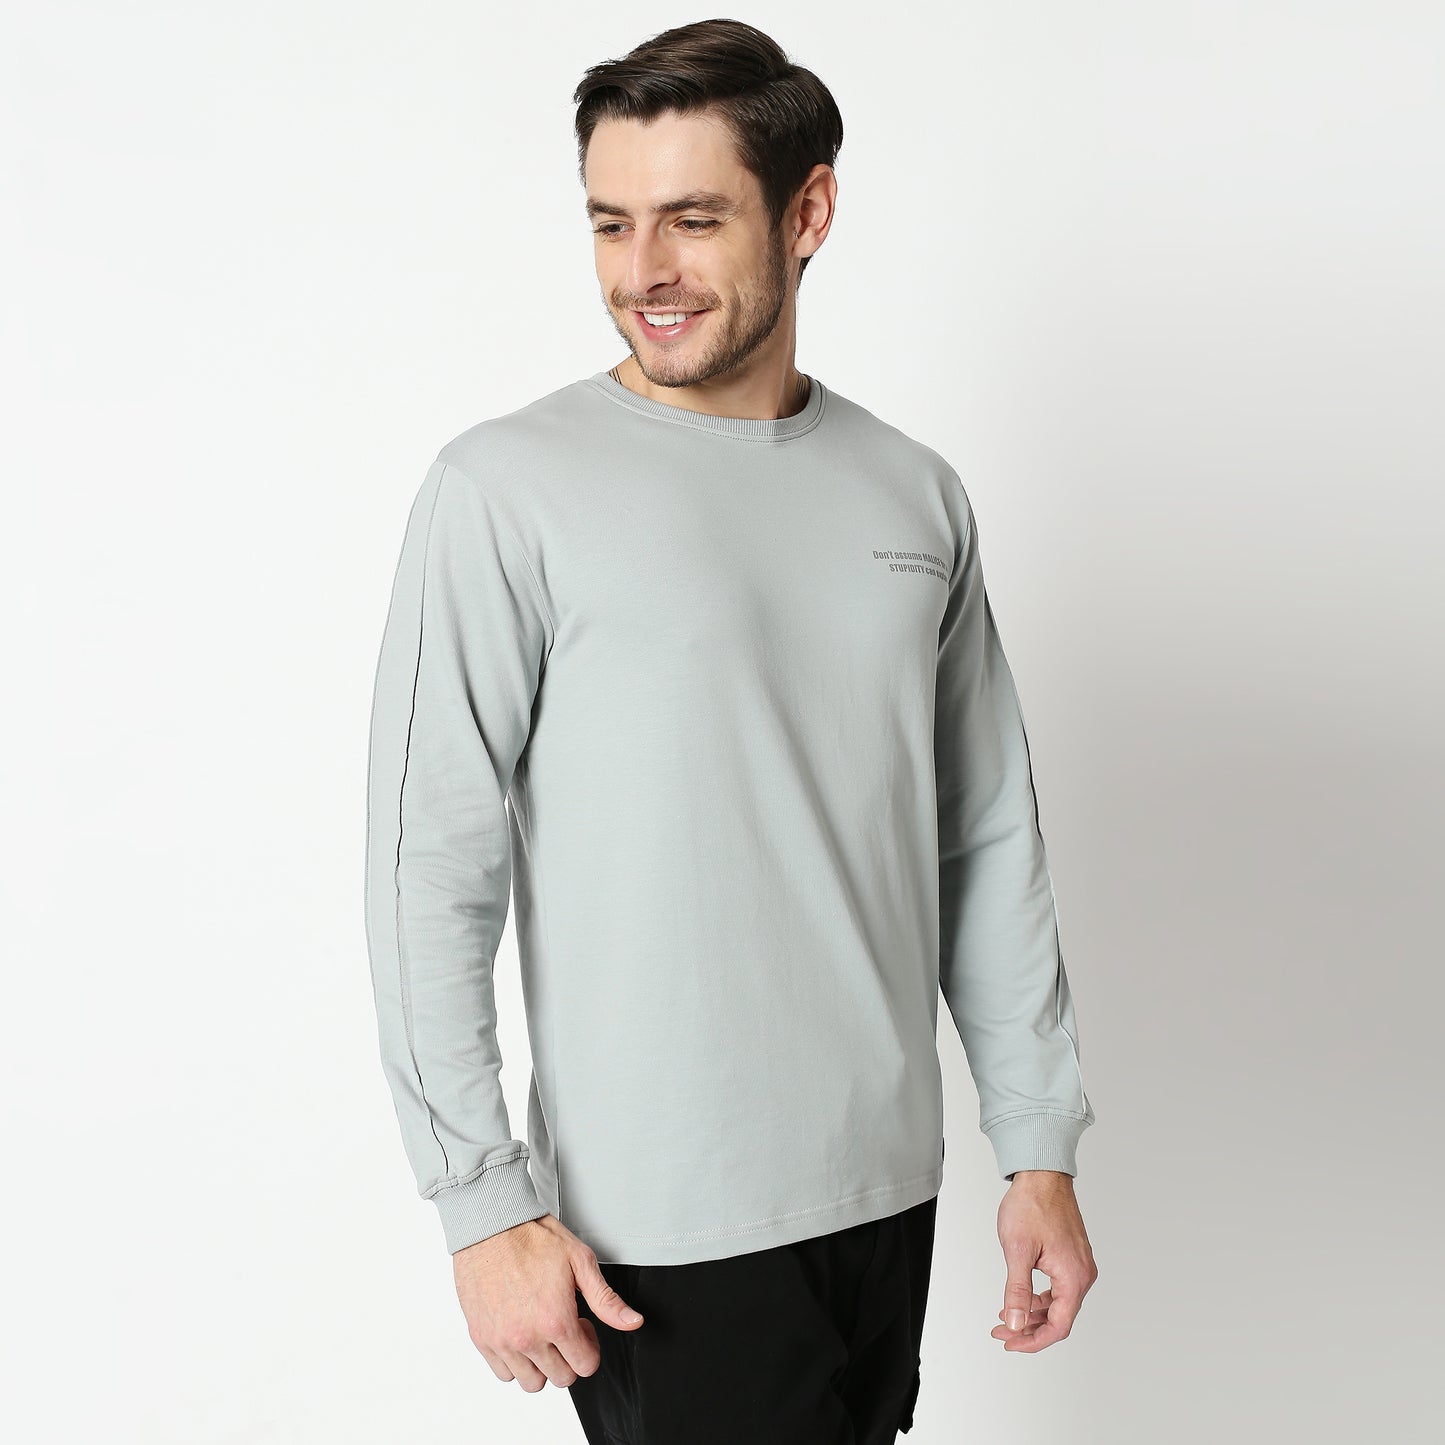 Fostino Ash Blue Pullover Full Sleeves T-Shirt - Fostino - T-Shirts